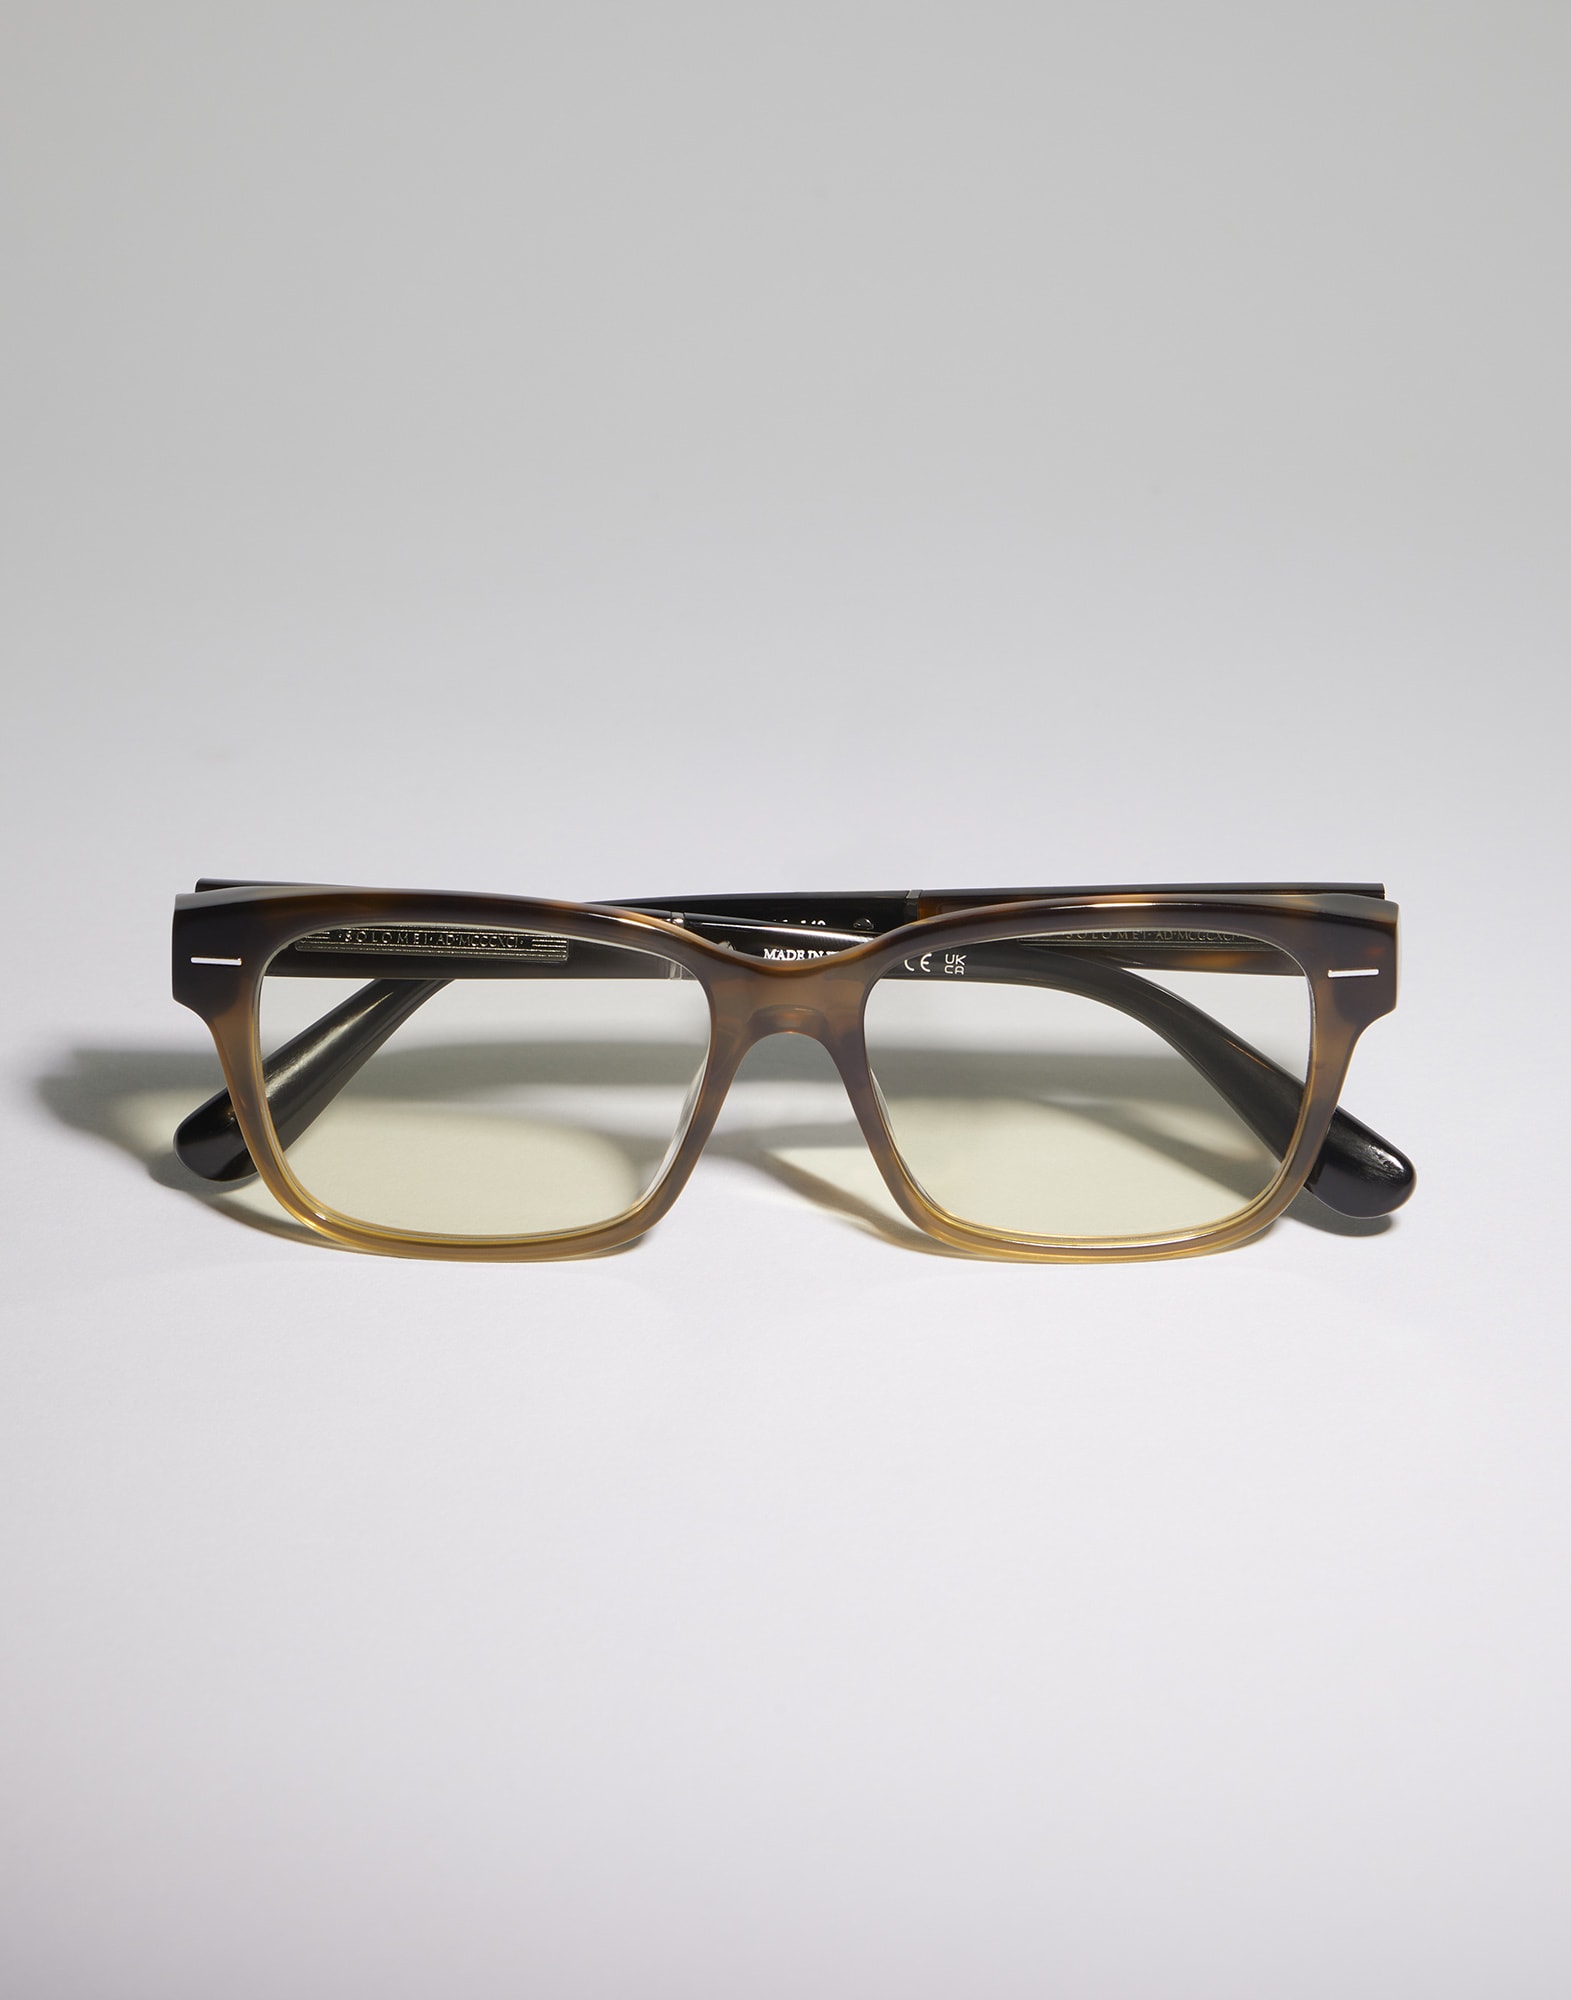 Rechteckige Brille aus Azetat